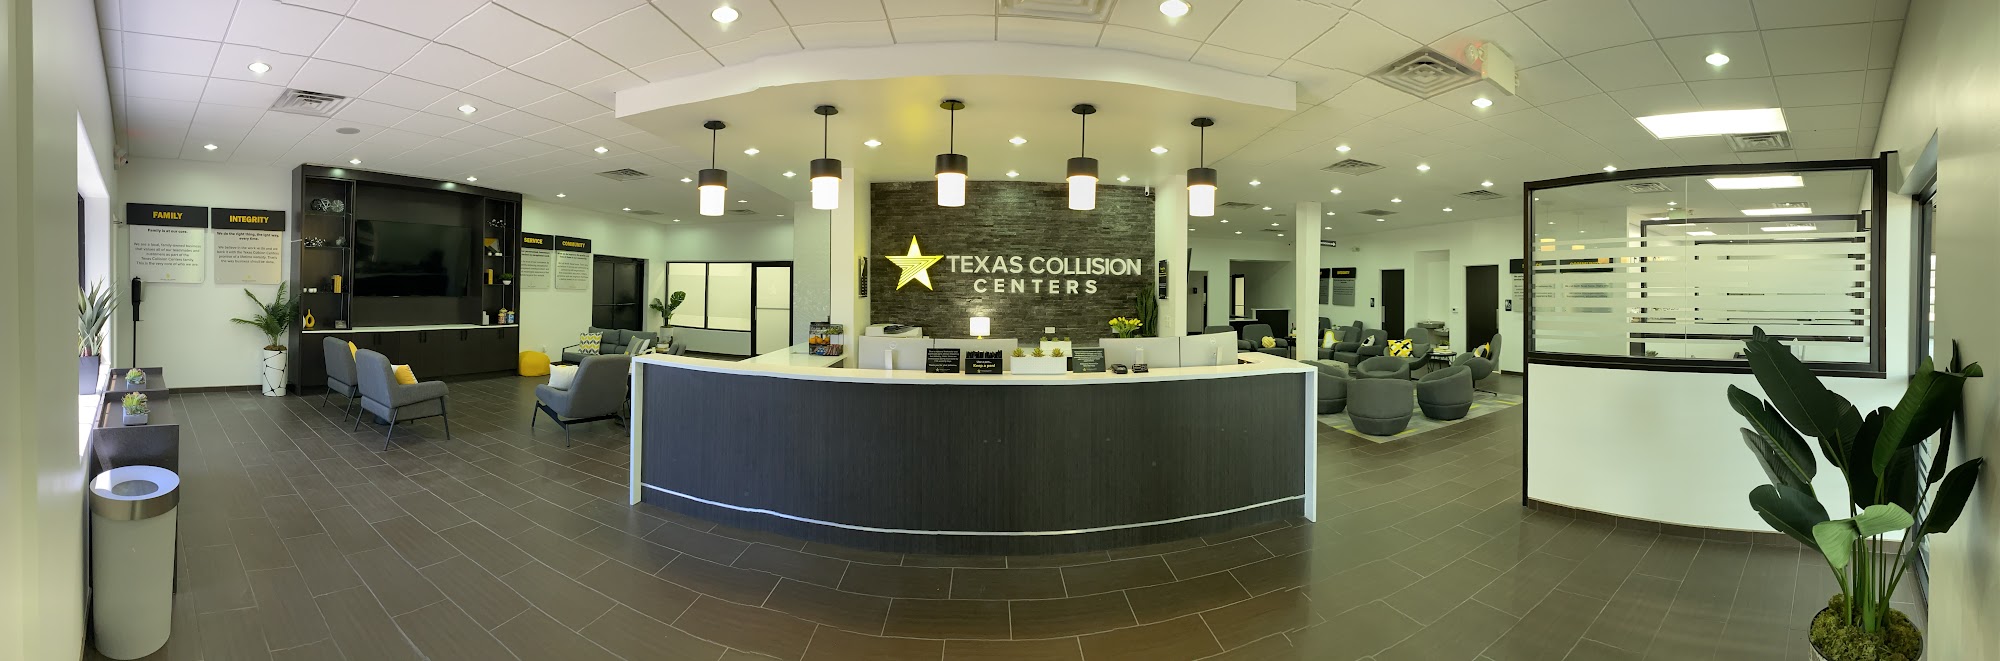 Texas Collision Centers